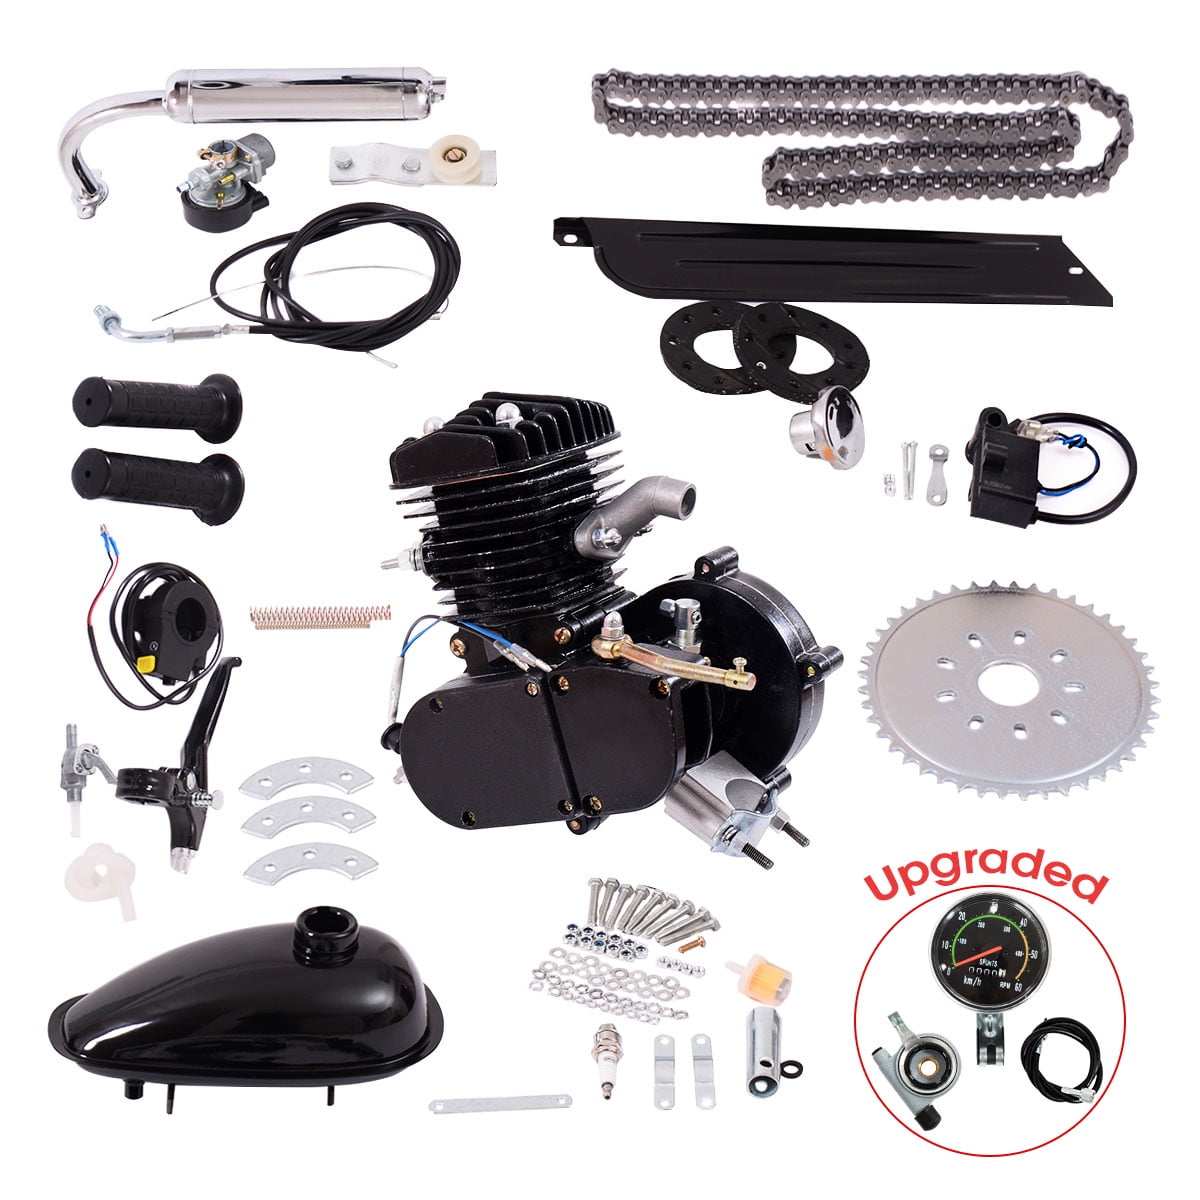 Black Stallion 66cc/80cc Angle Fire Slant Head Bicycle Engine Kit